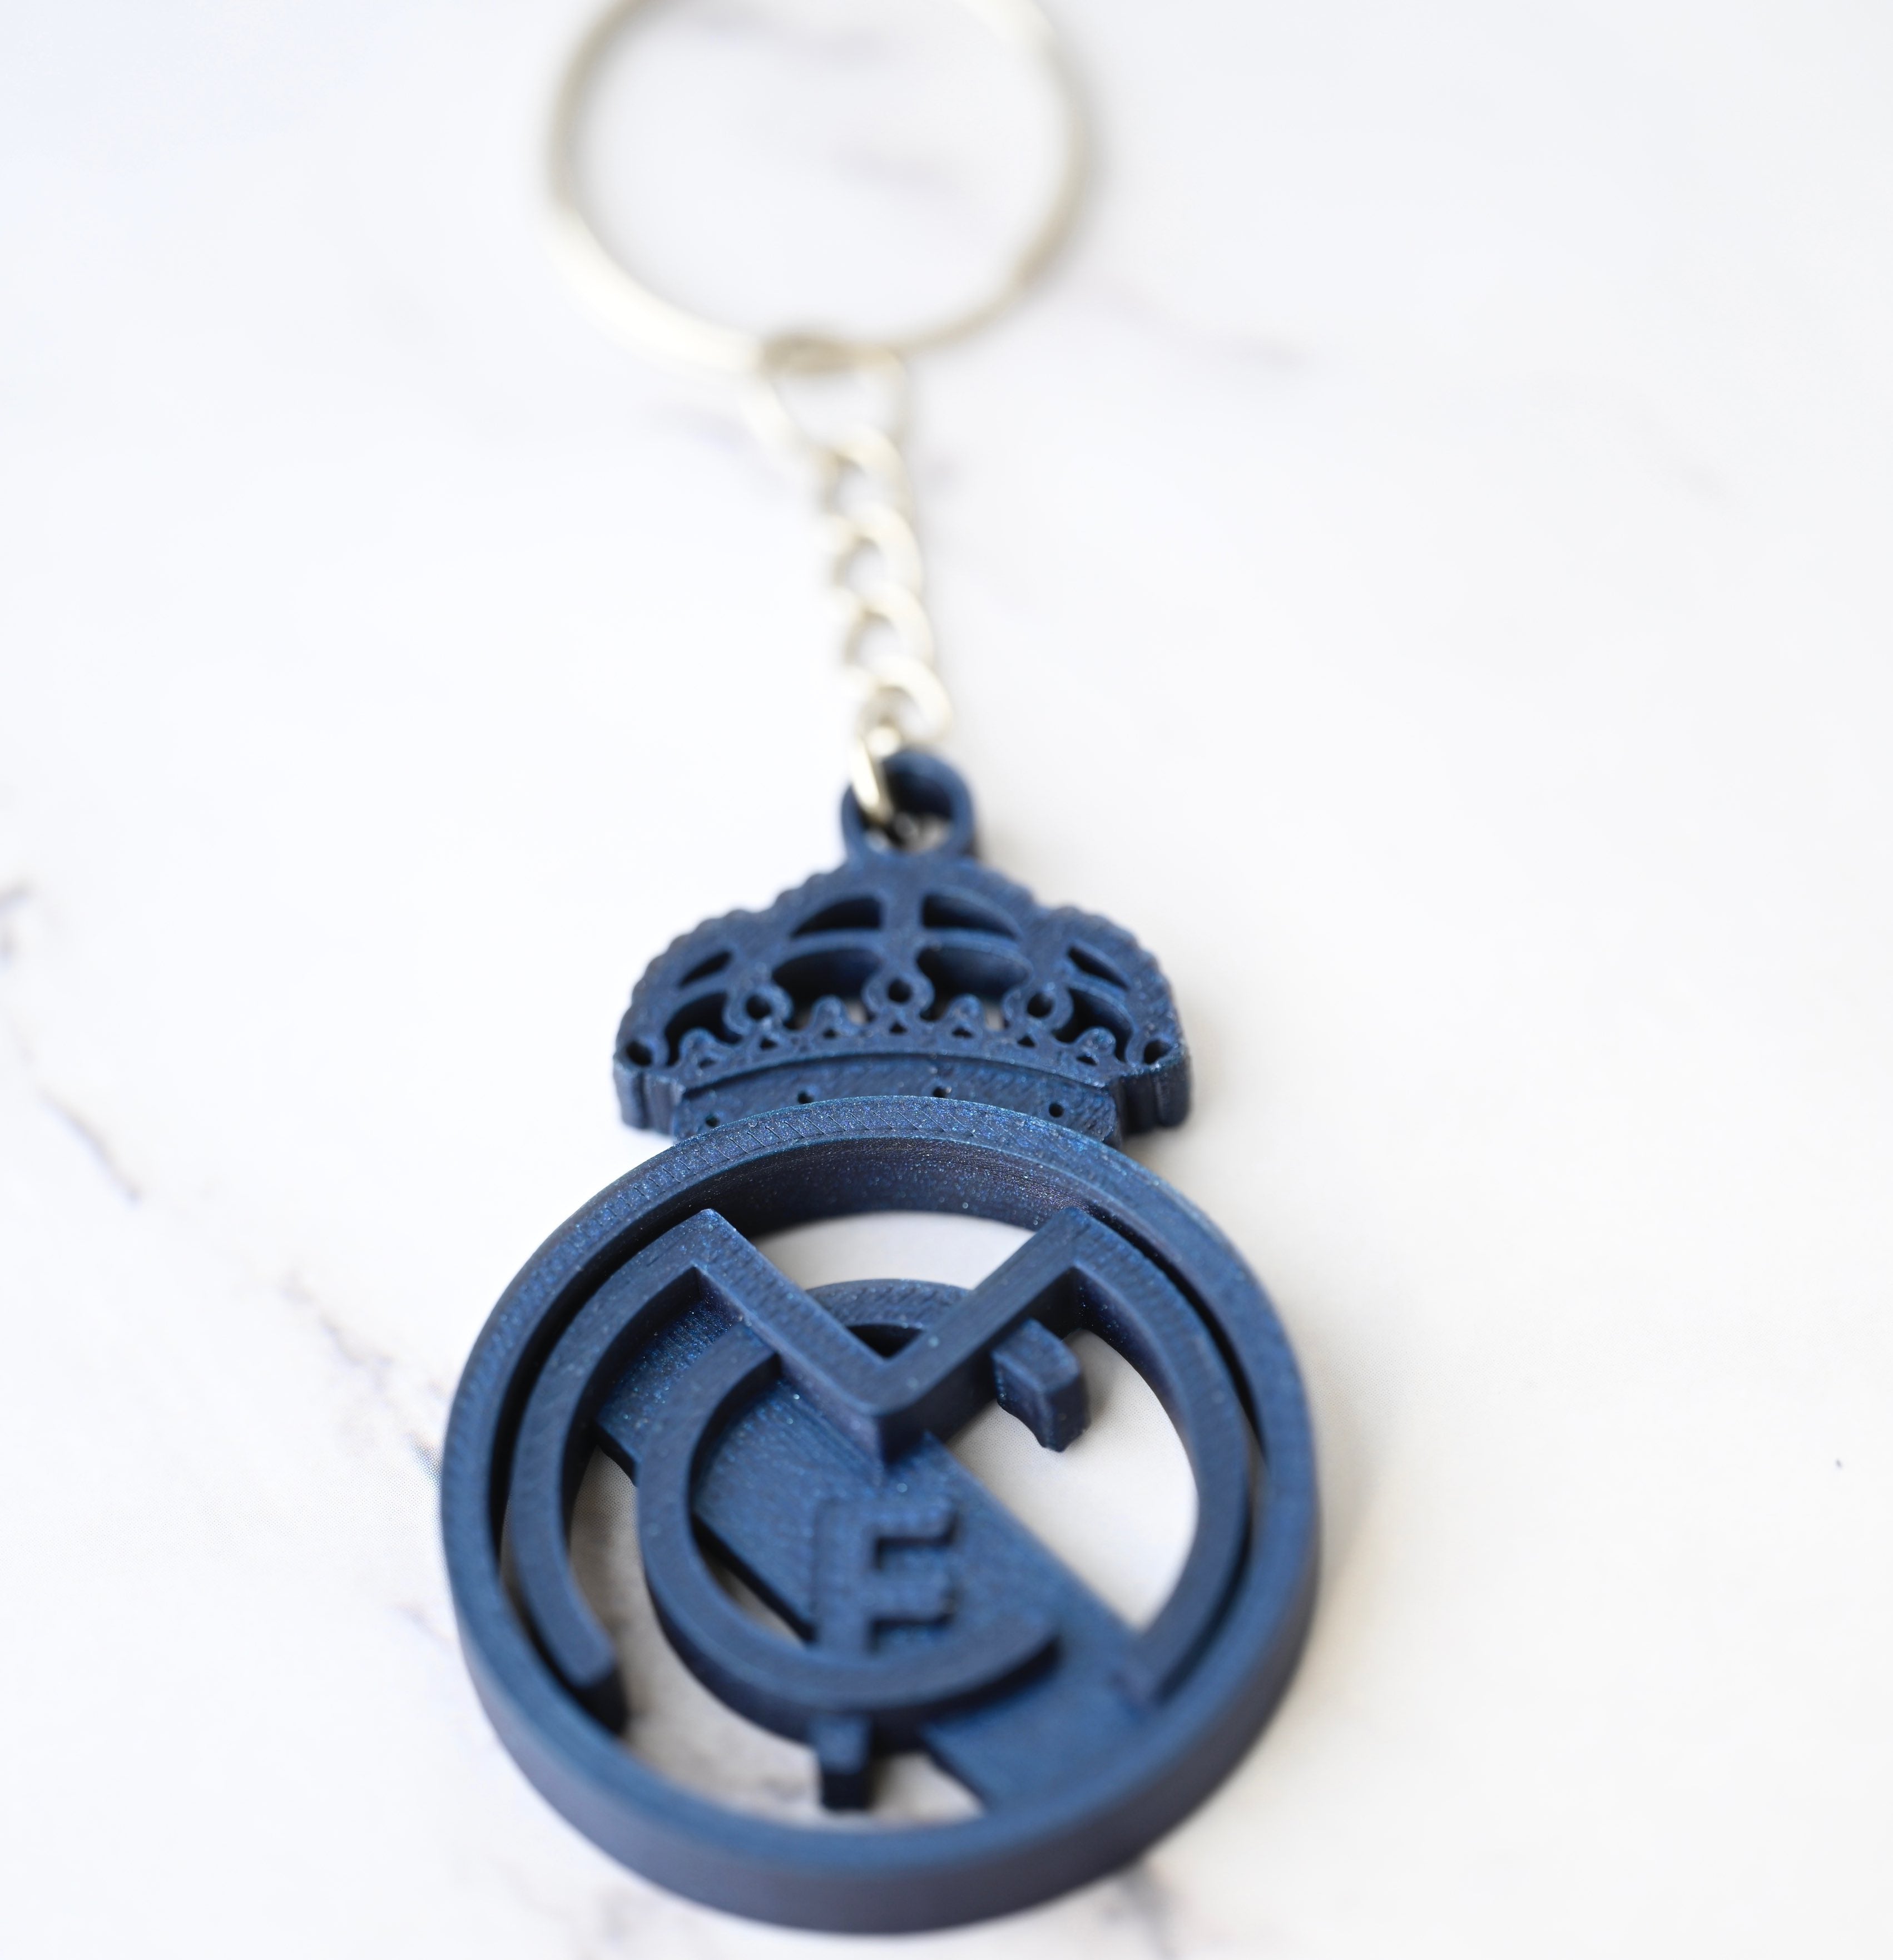 Real Madrid keychain